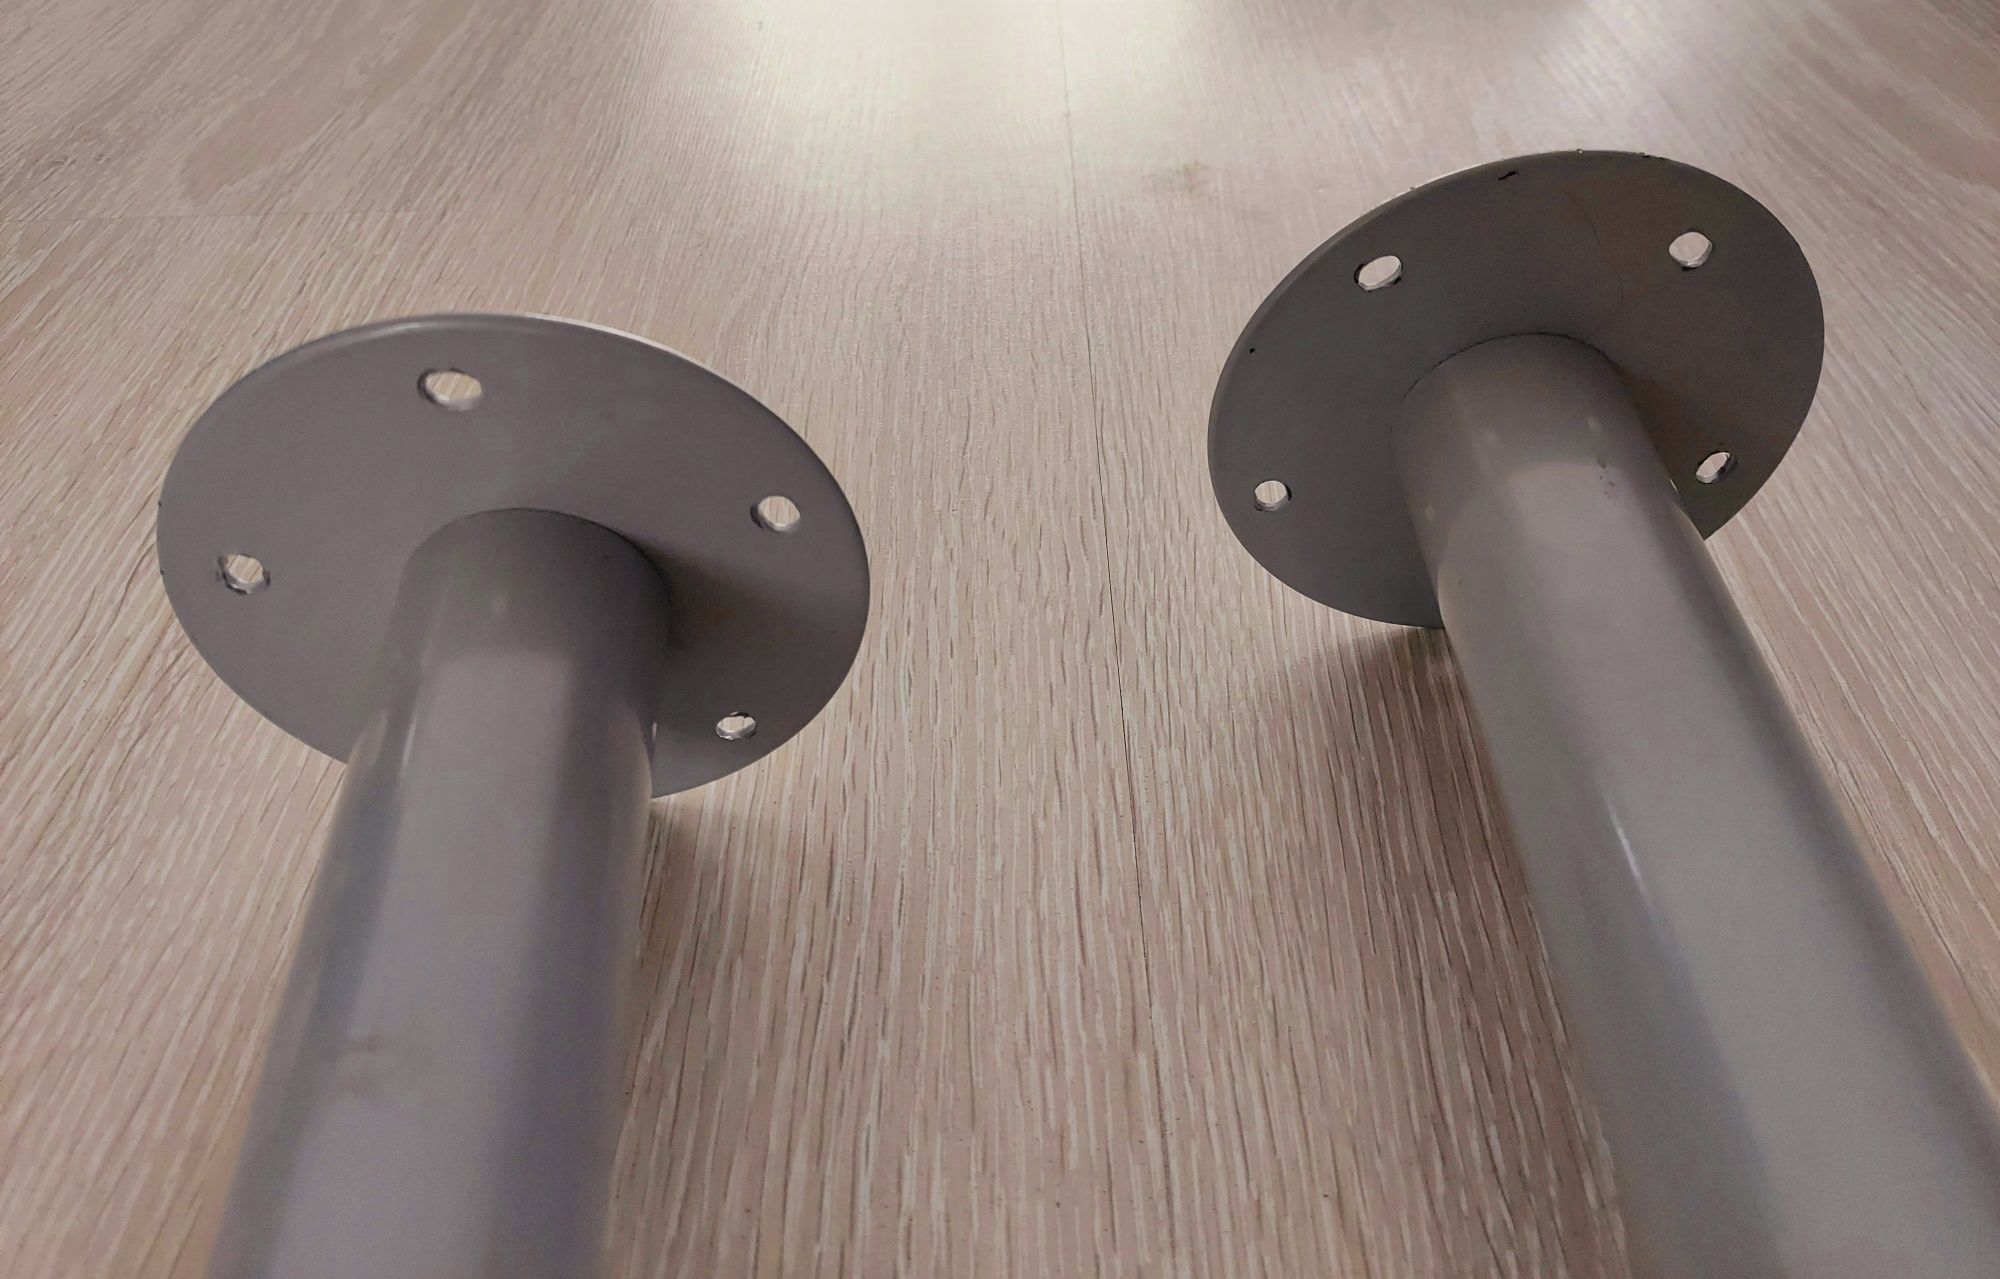 Nogi regulowane do biurka , stołu,  Ikea 70-72 cm cena 2 sztuki.